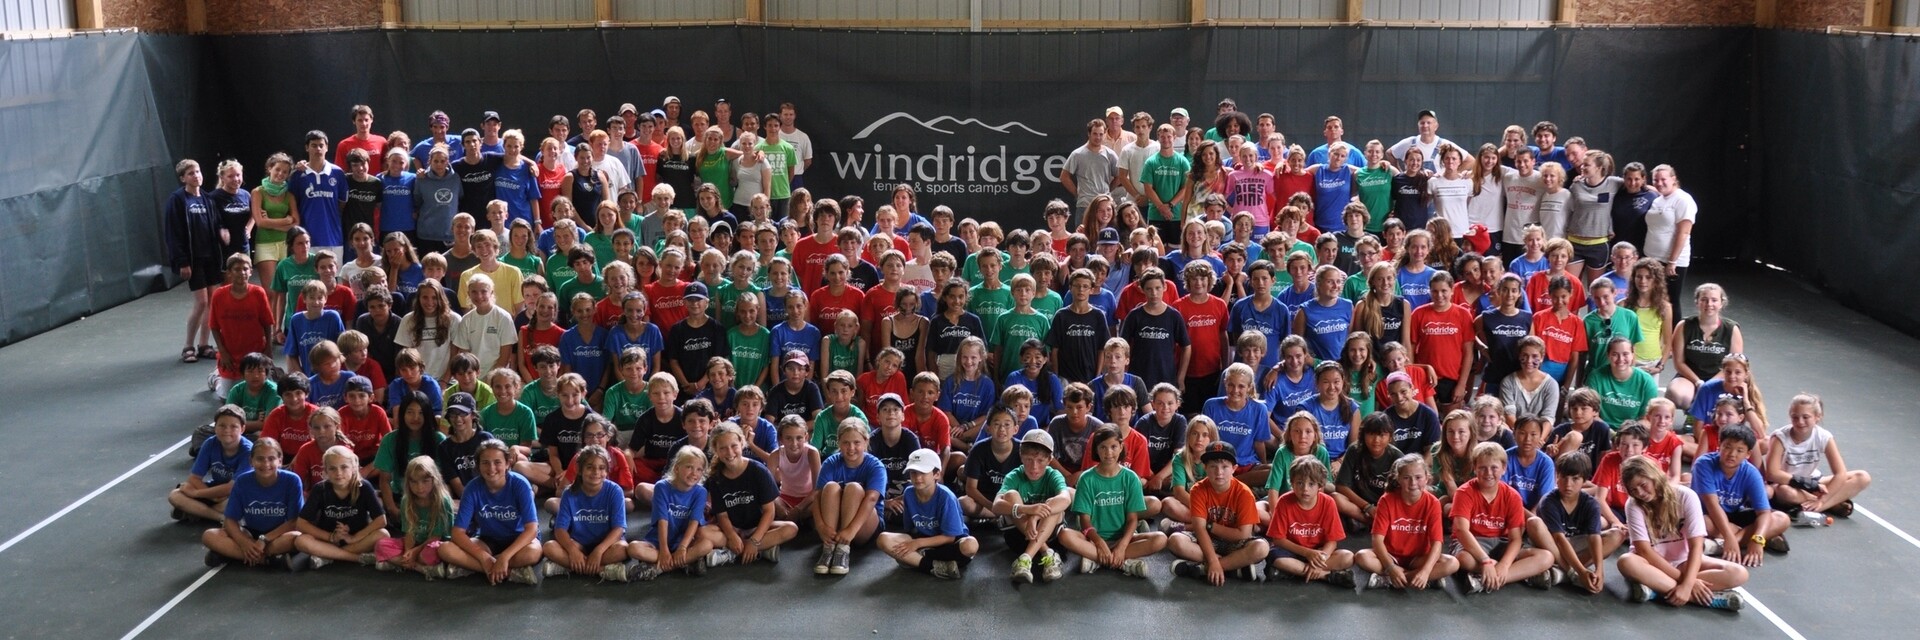 Windridge staff and students large group photo